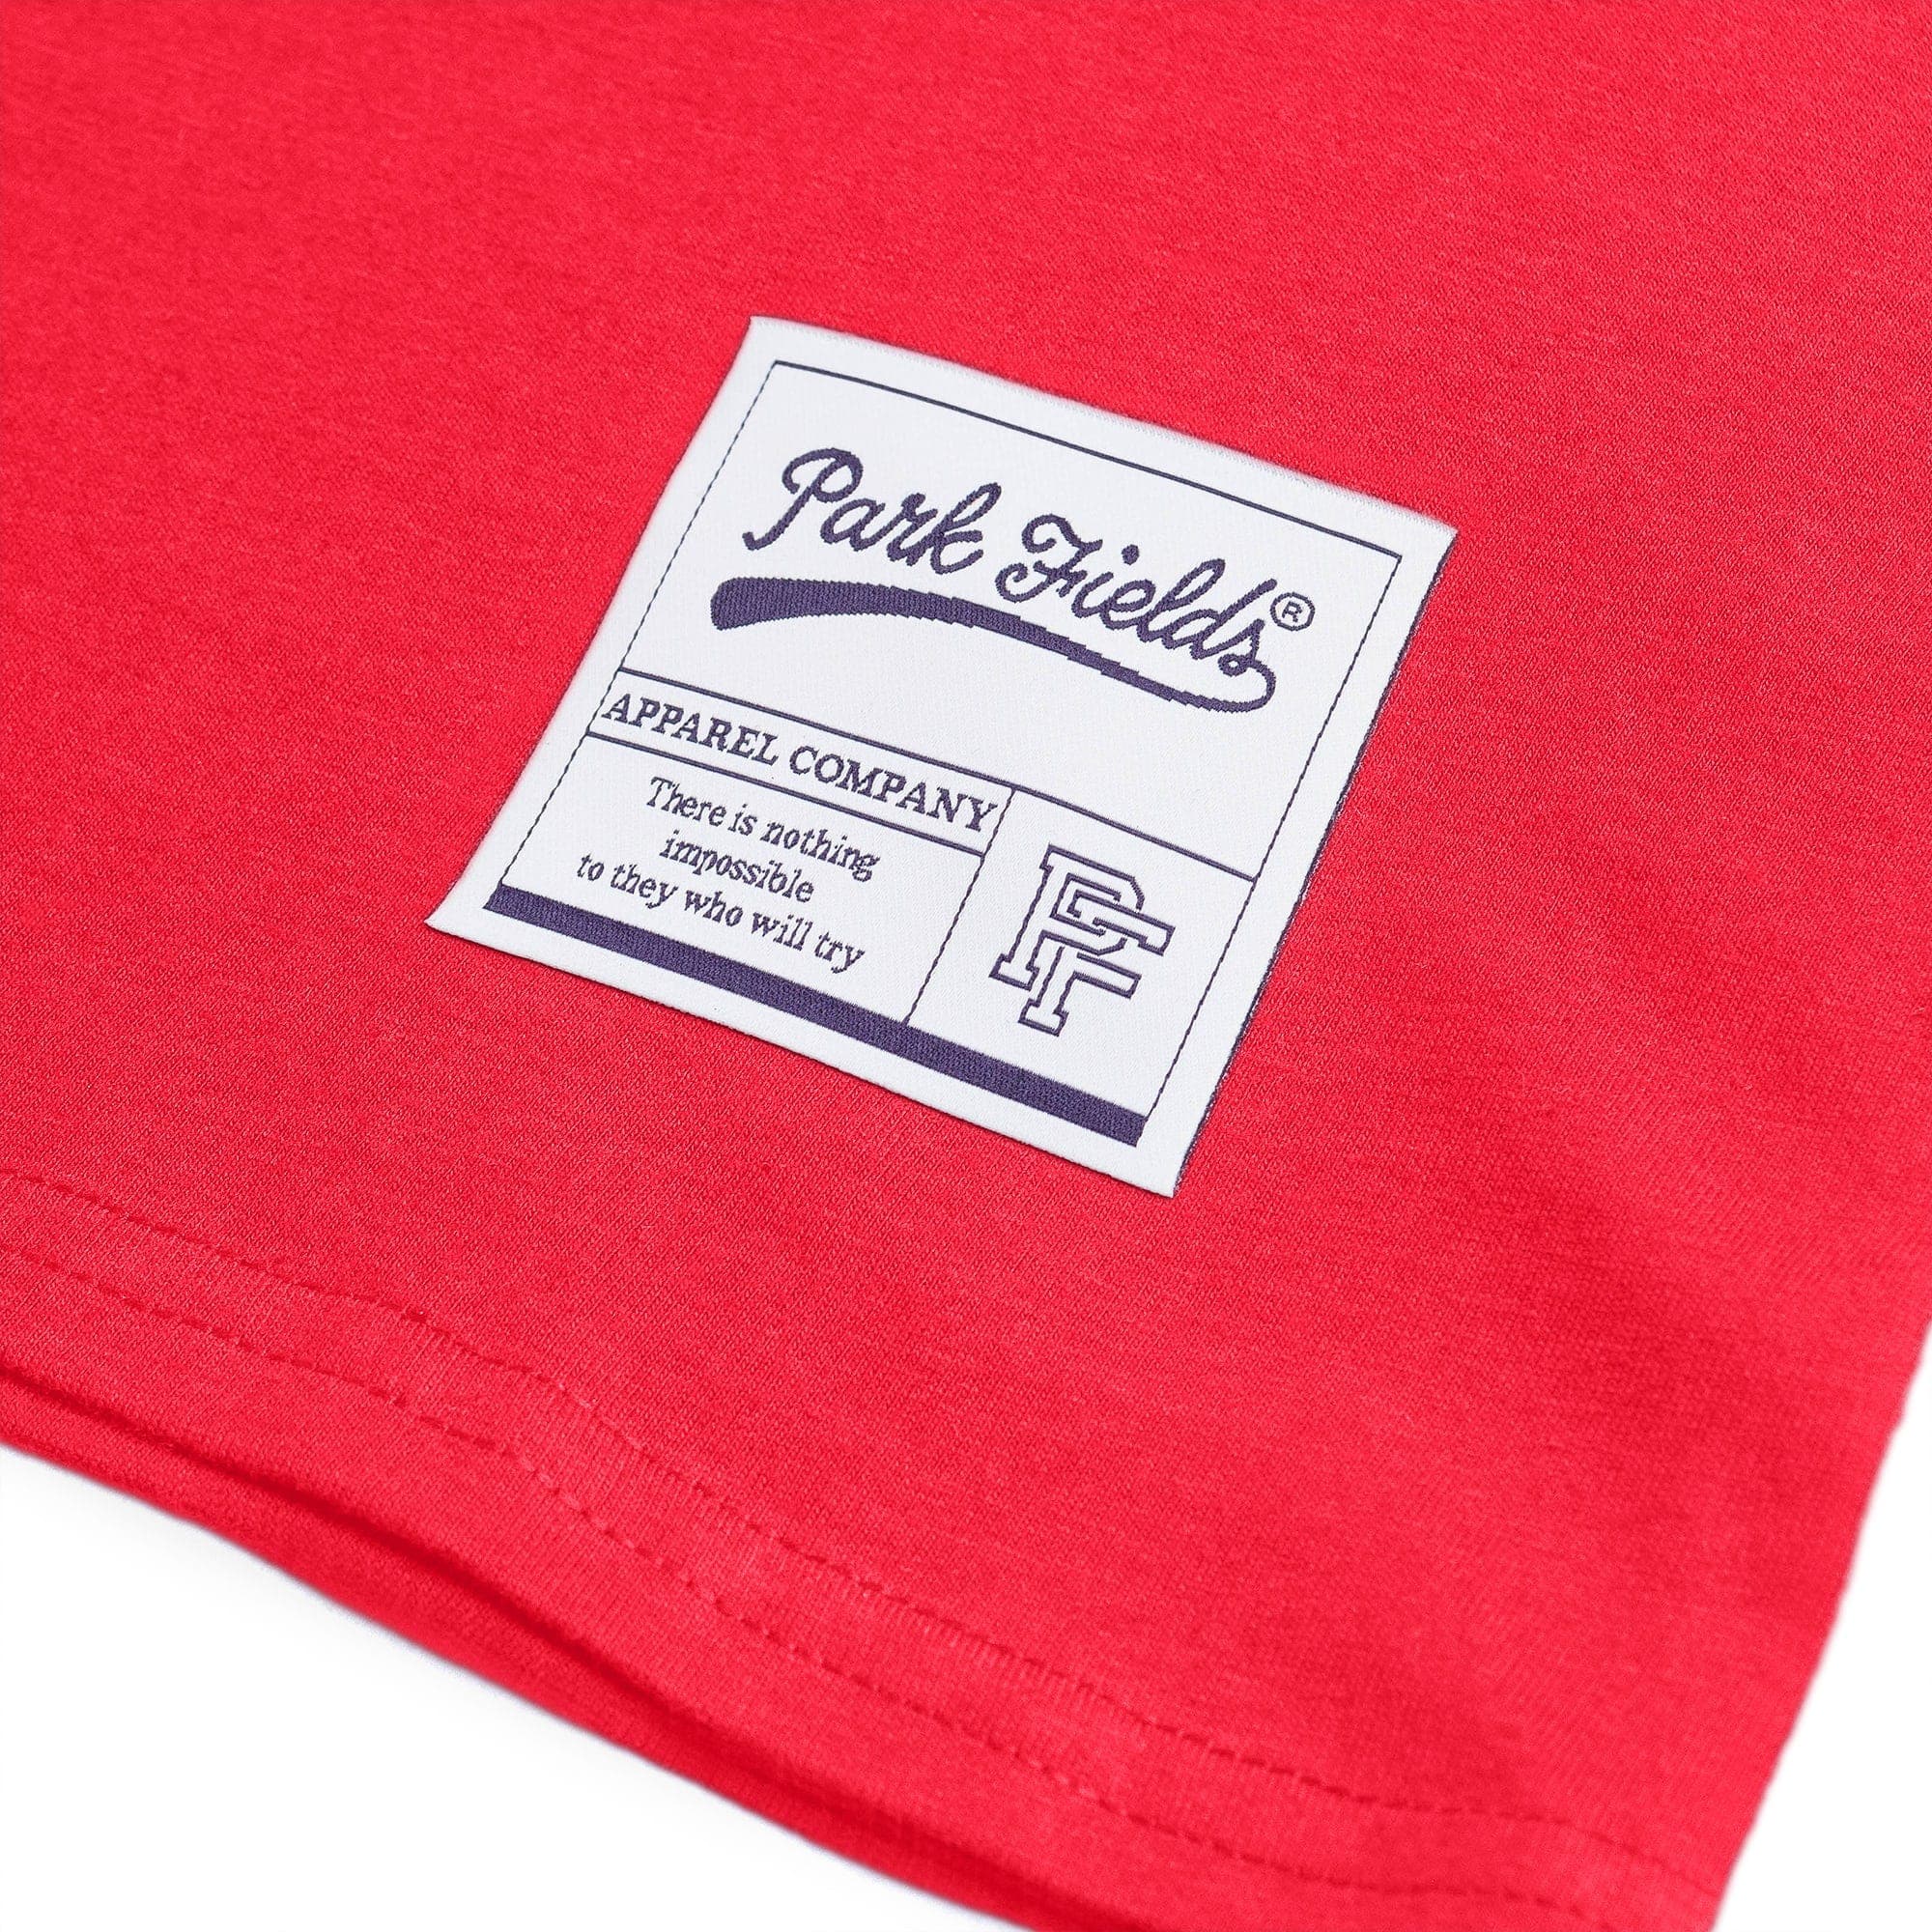 EST 1961 T-Shirt - Red